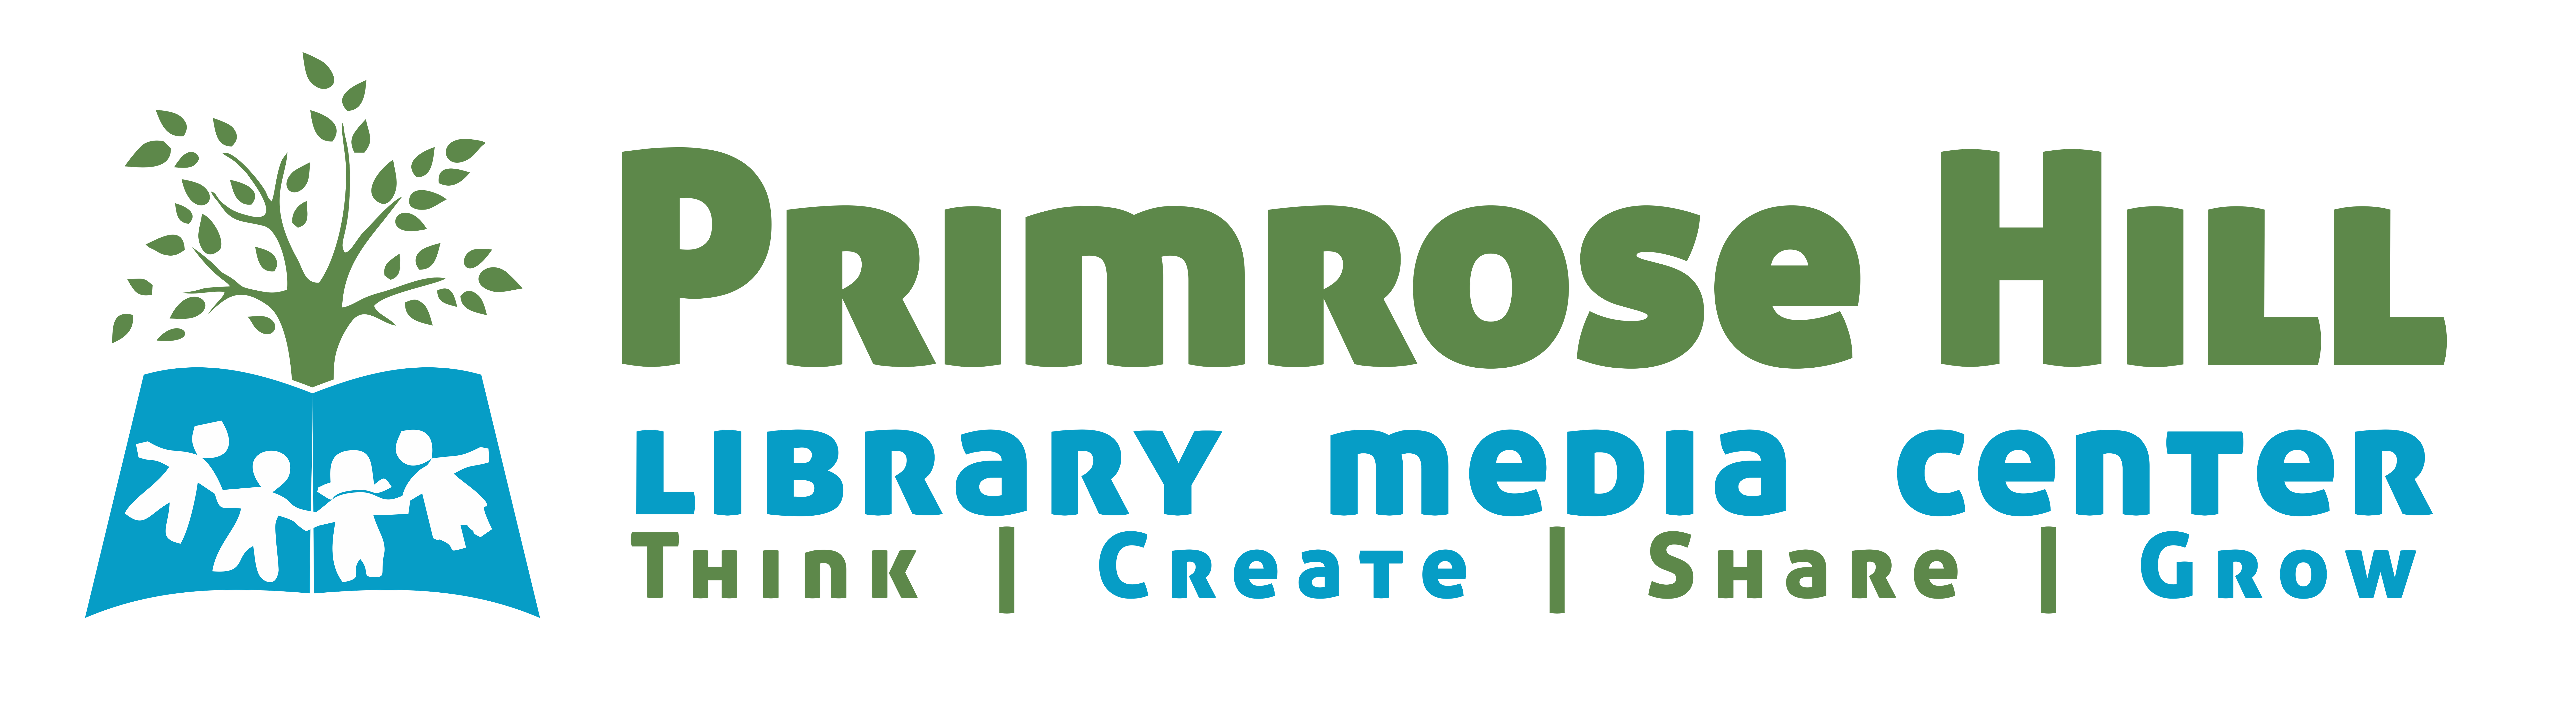 Primrose Hill Library Media Center, Think, Create, Share, Grow